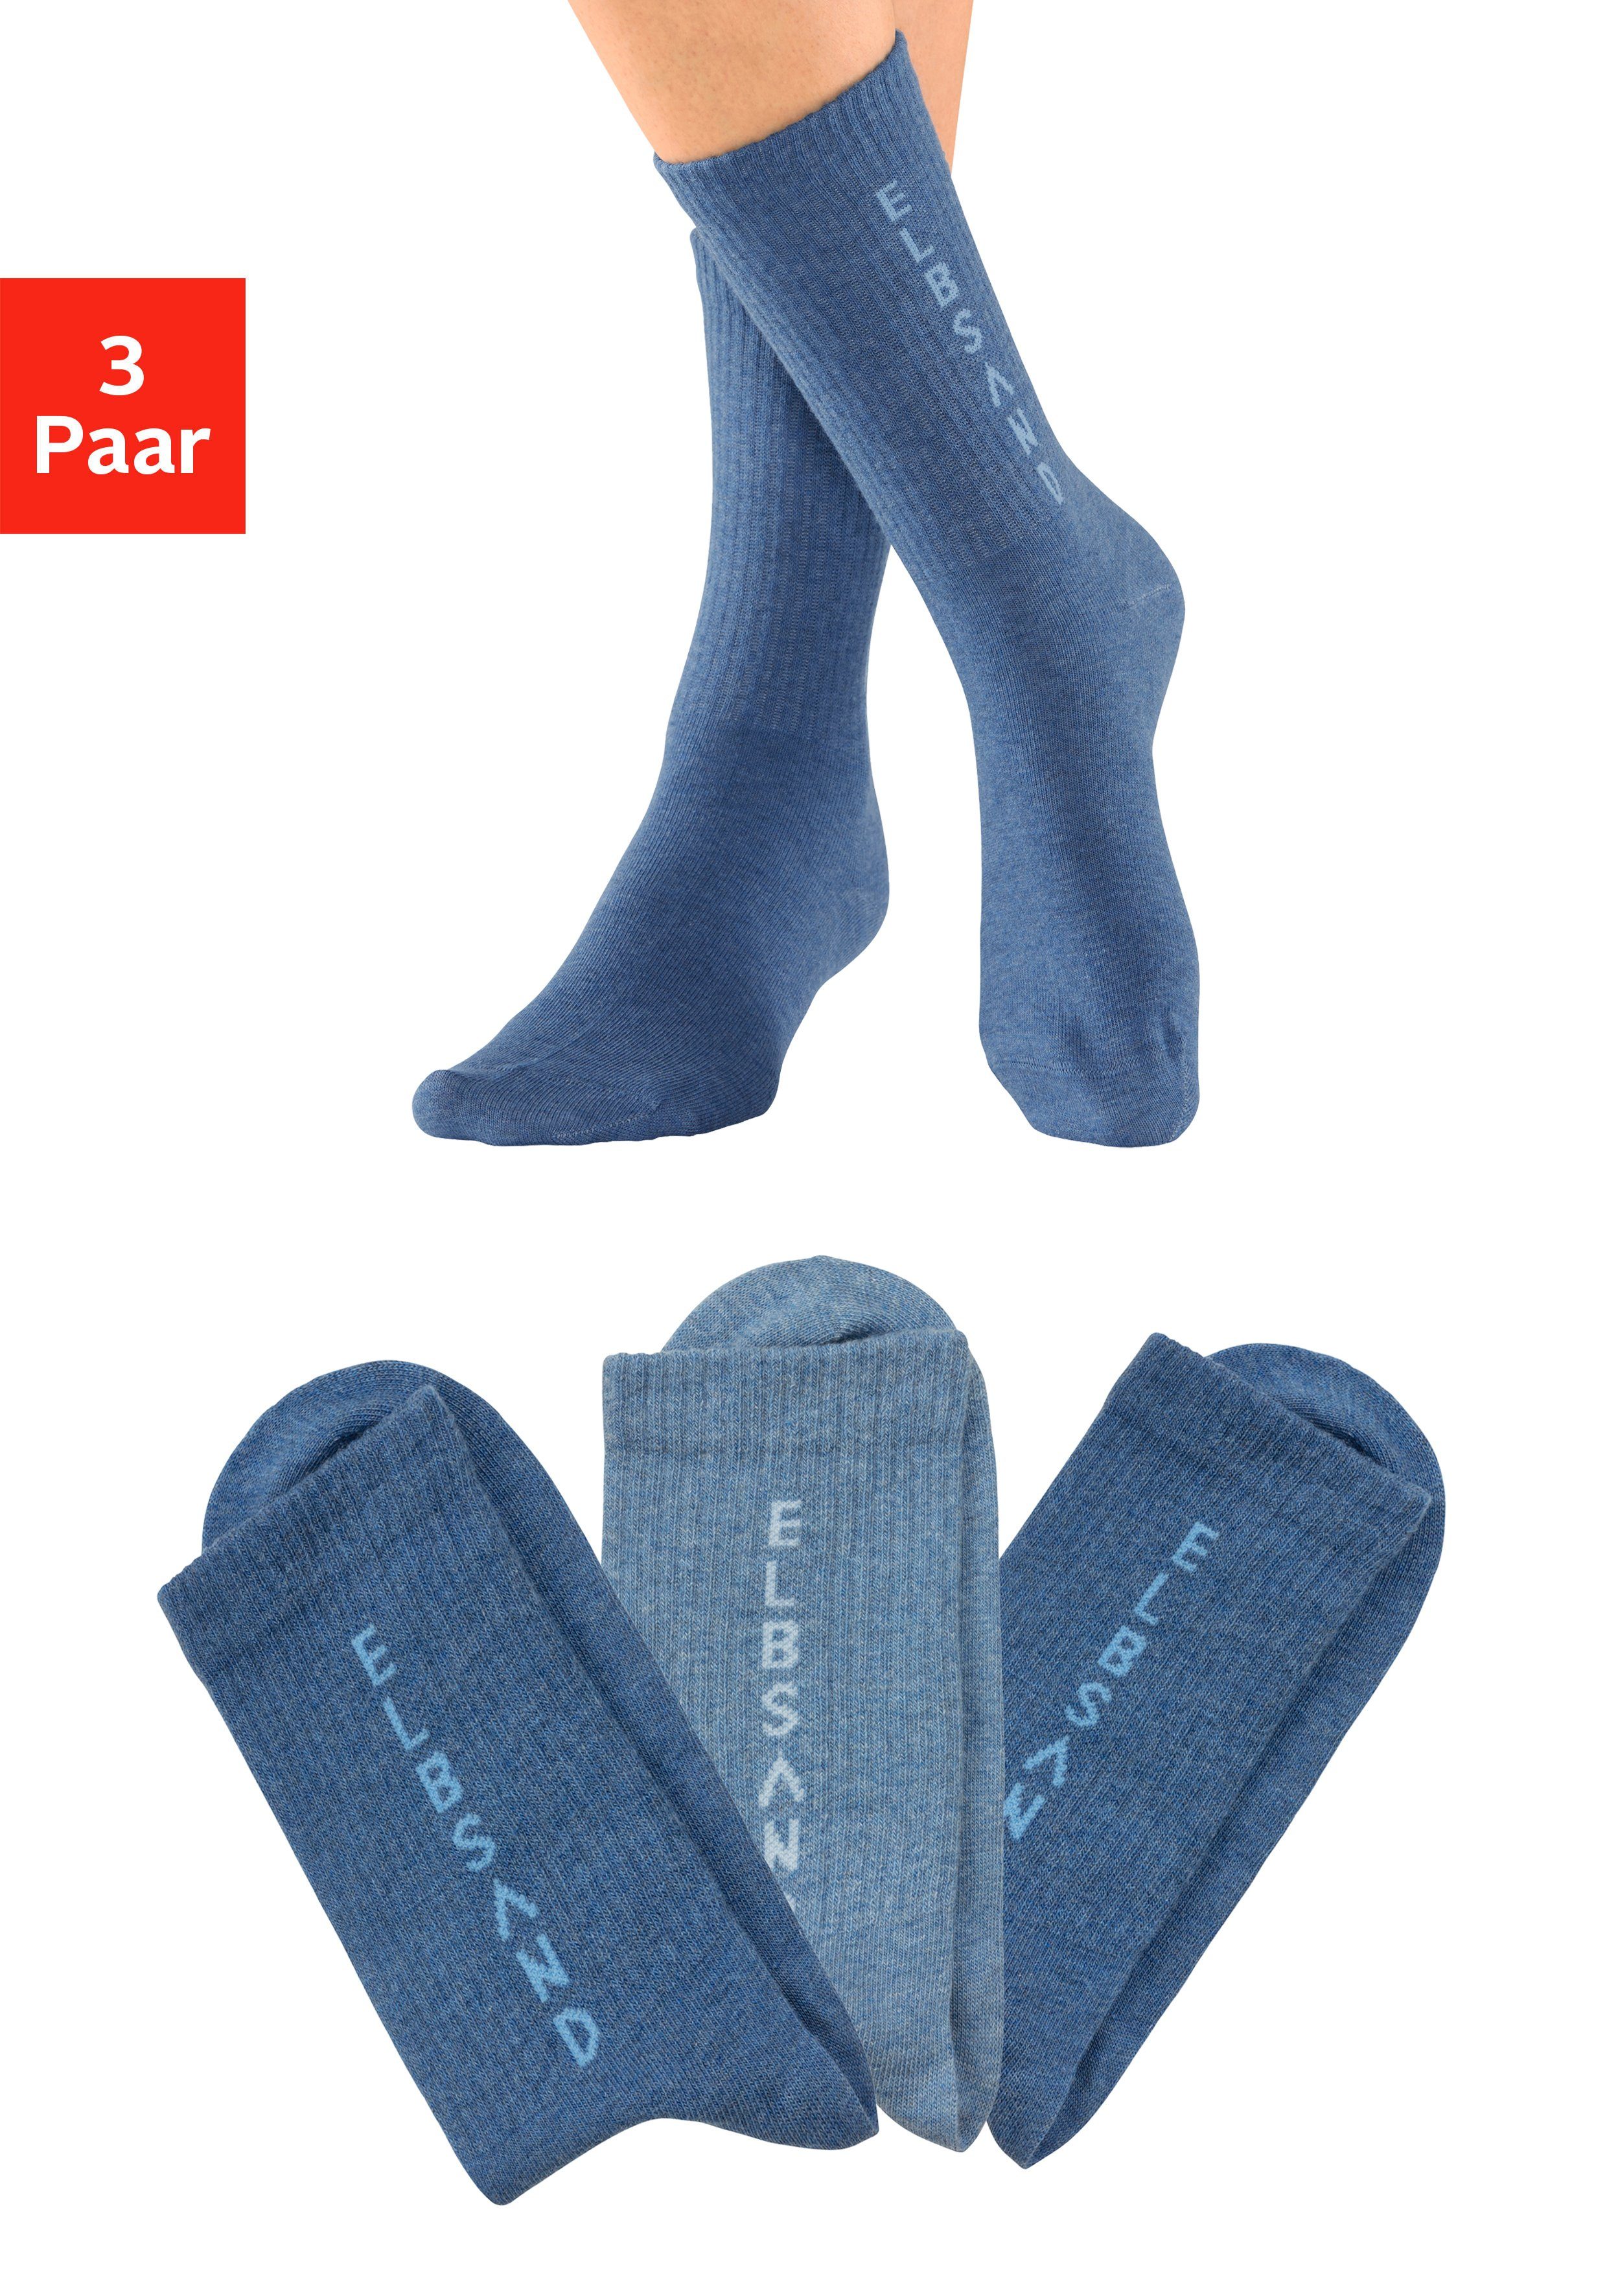 Elbsand Socken (3-Paar) mit eingestricktem Schriftzug 2x dunkel jeans meliert, 1x hell jeans meliert | Lange Socken